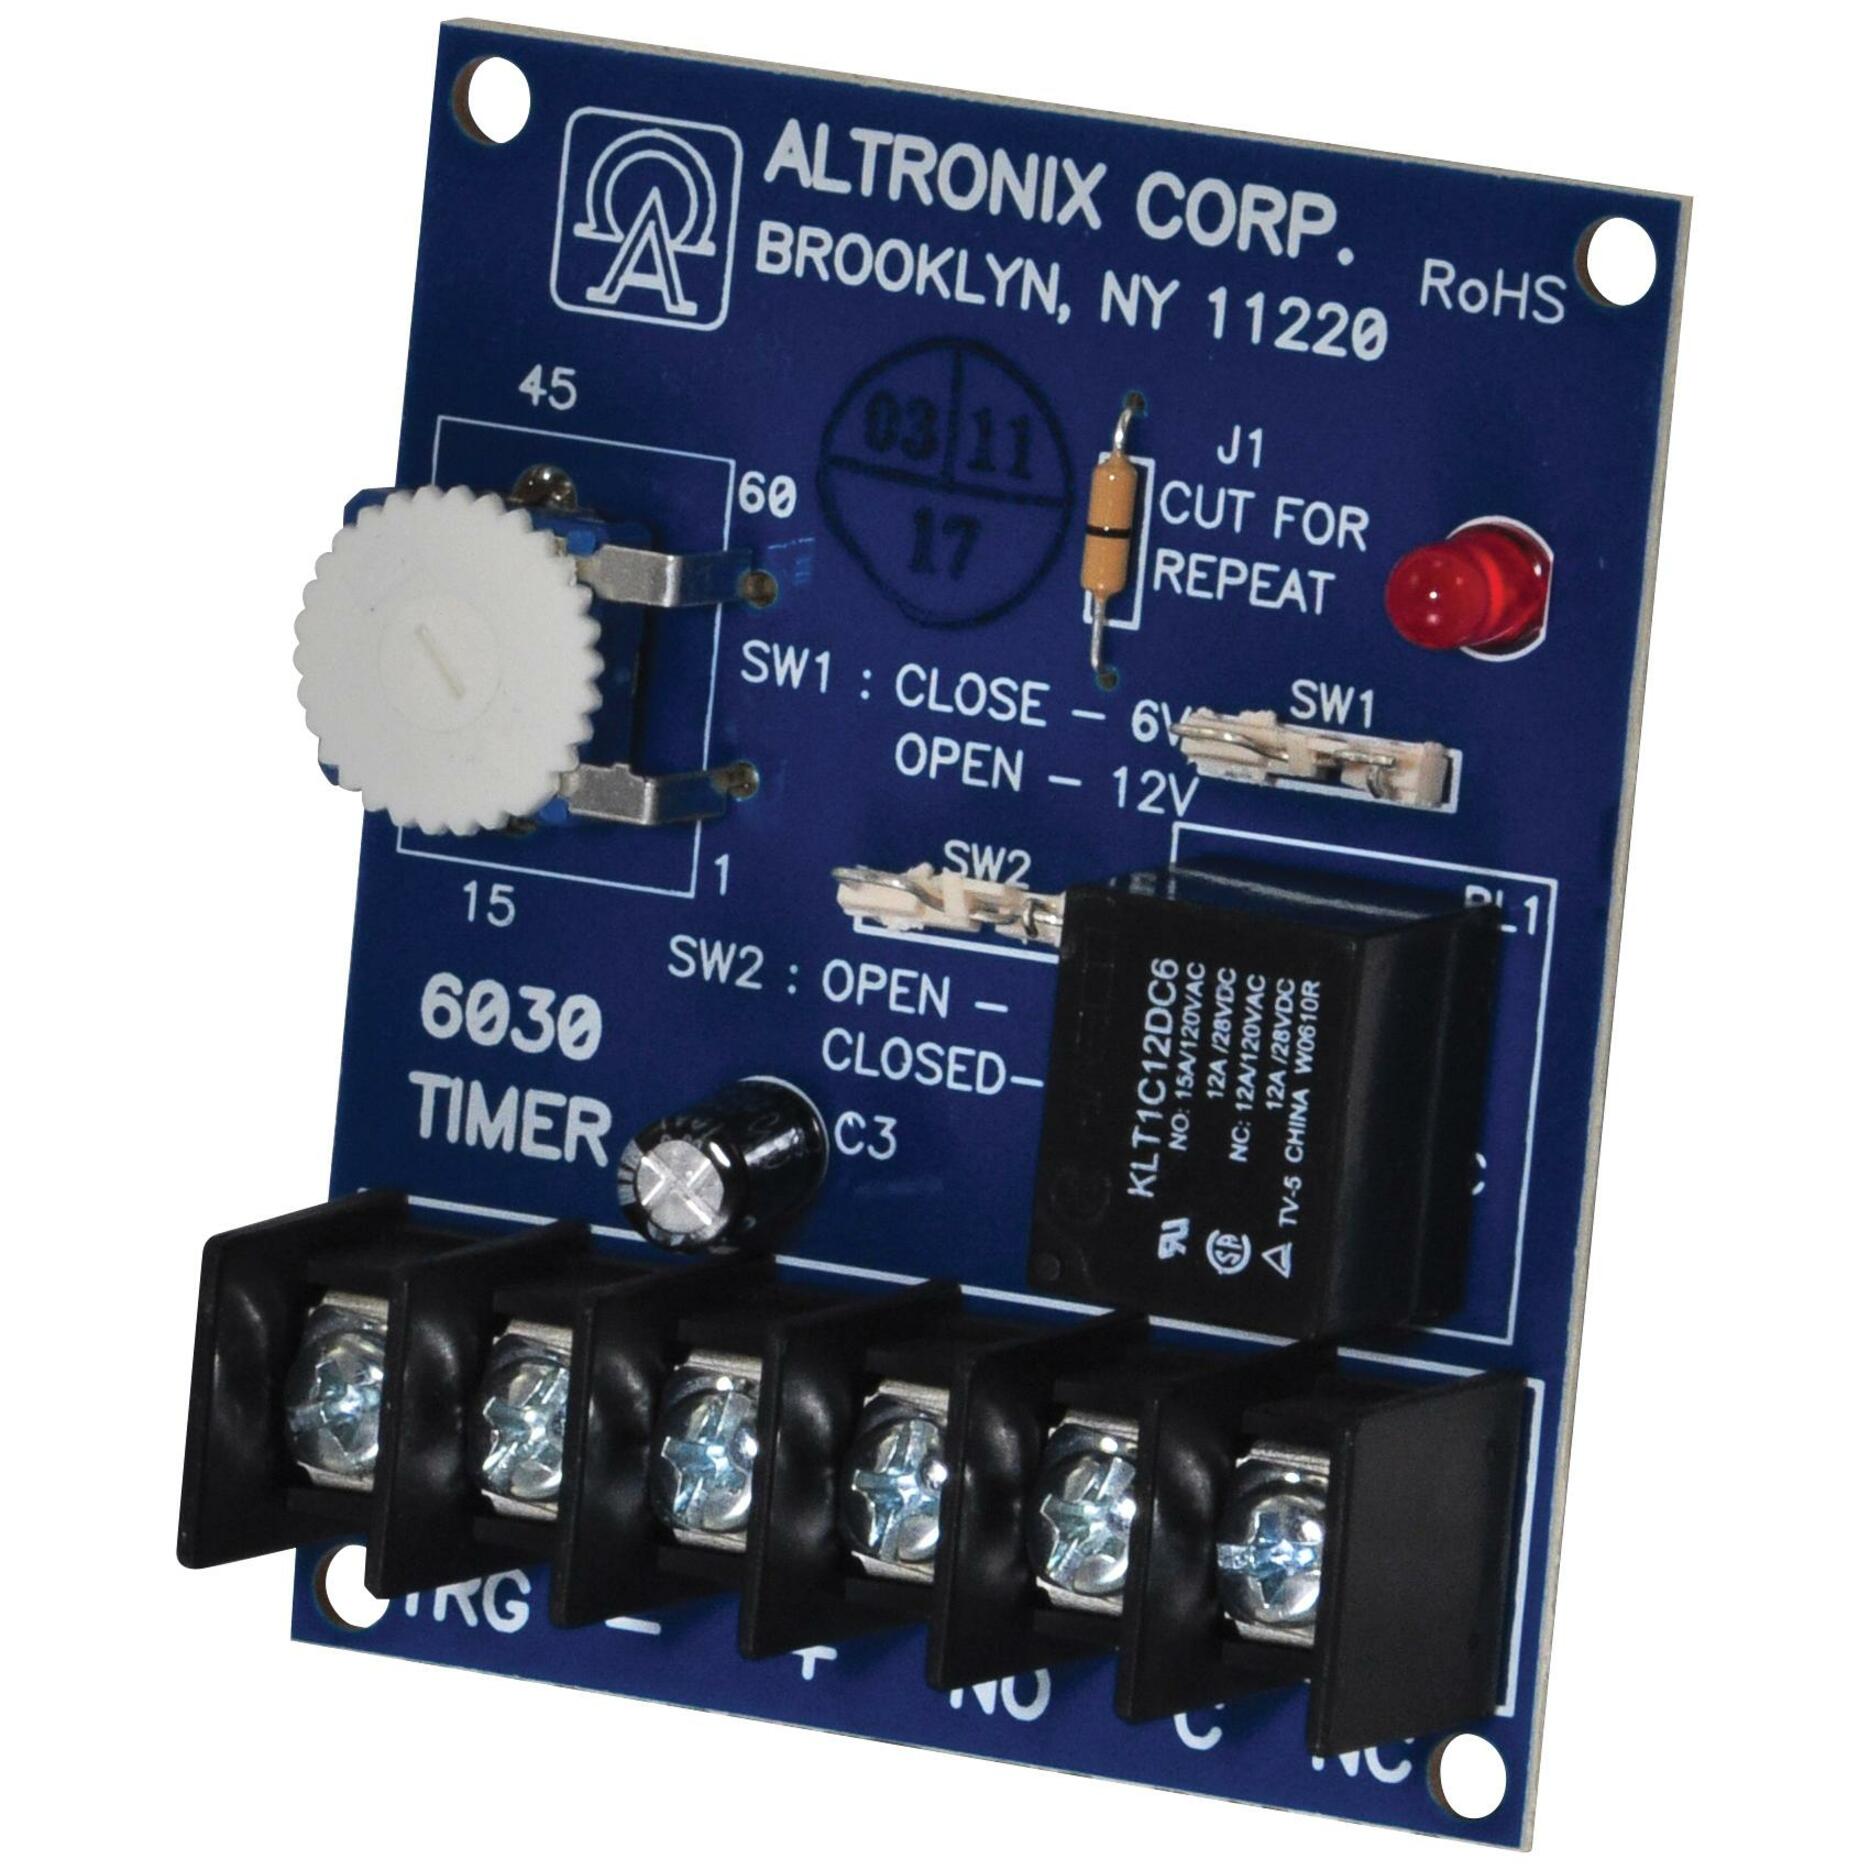 Altronix 6030 Digital Timer - 1 Hour, LED Display, Lifetime Warranty, RoHS Certified